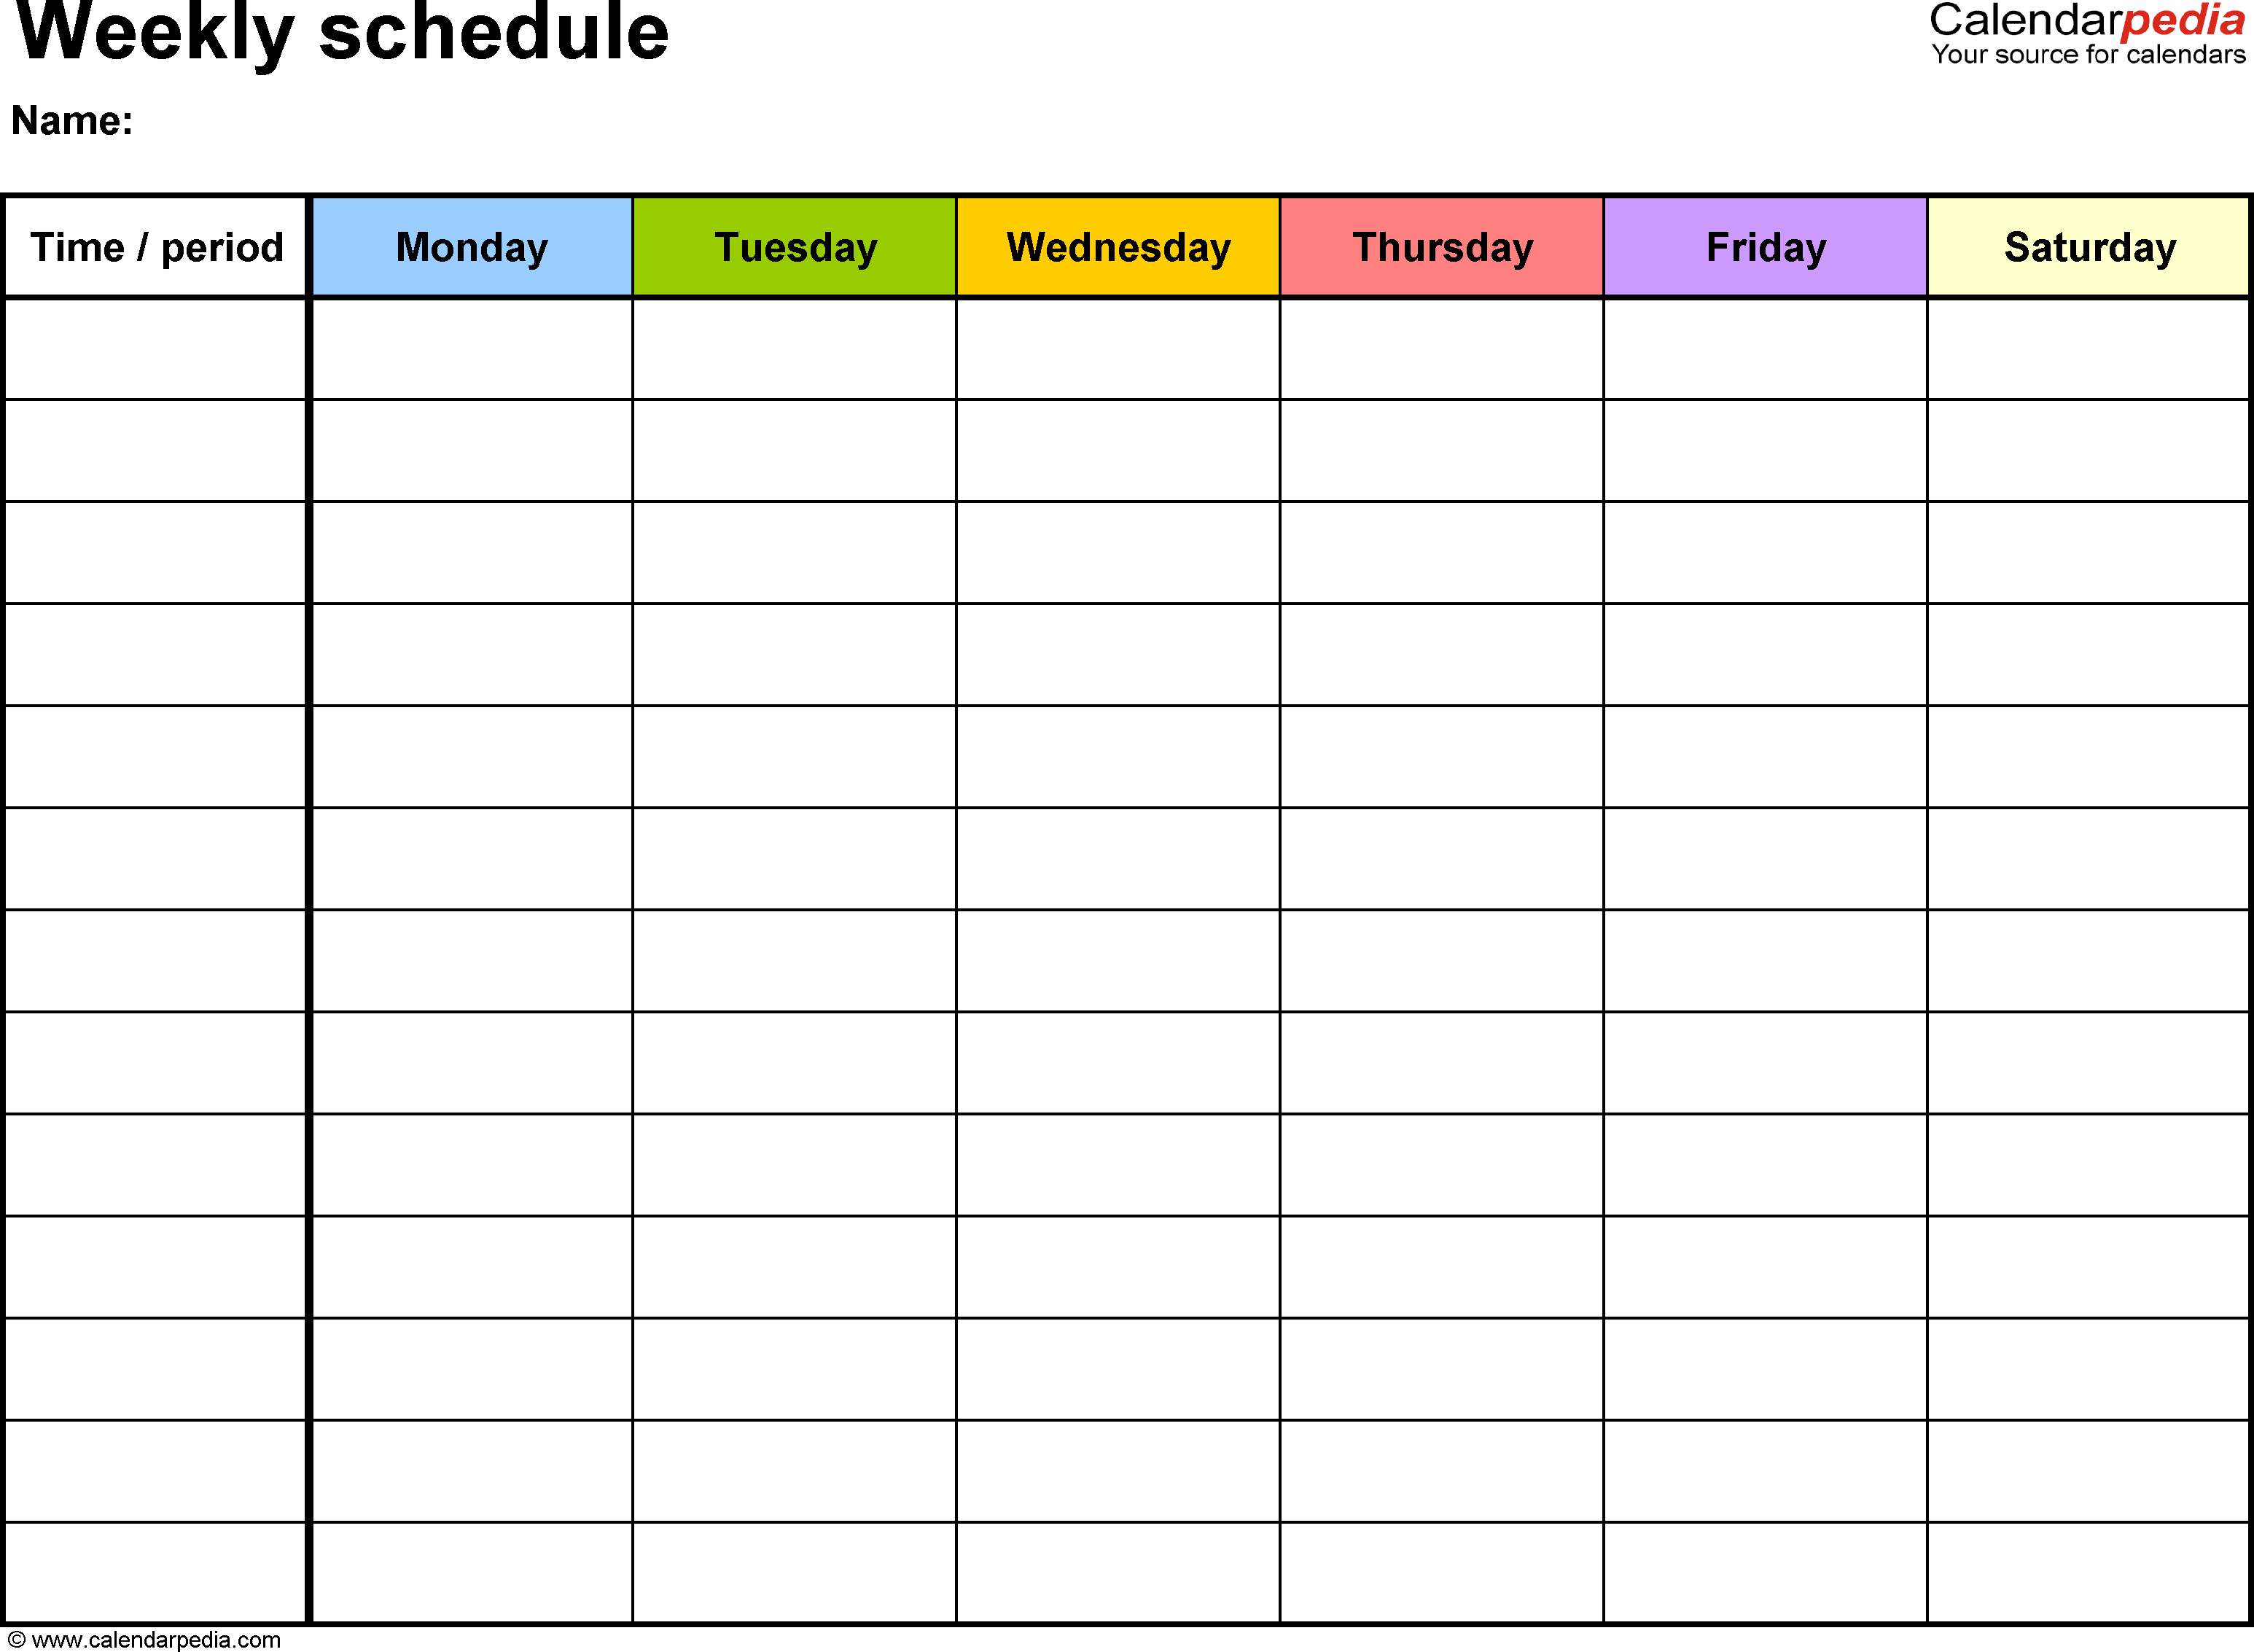 Weekly Schedule Template Word